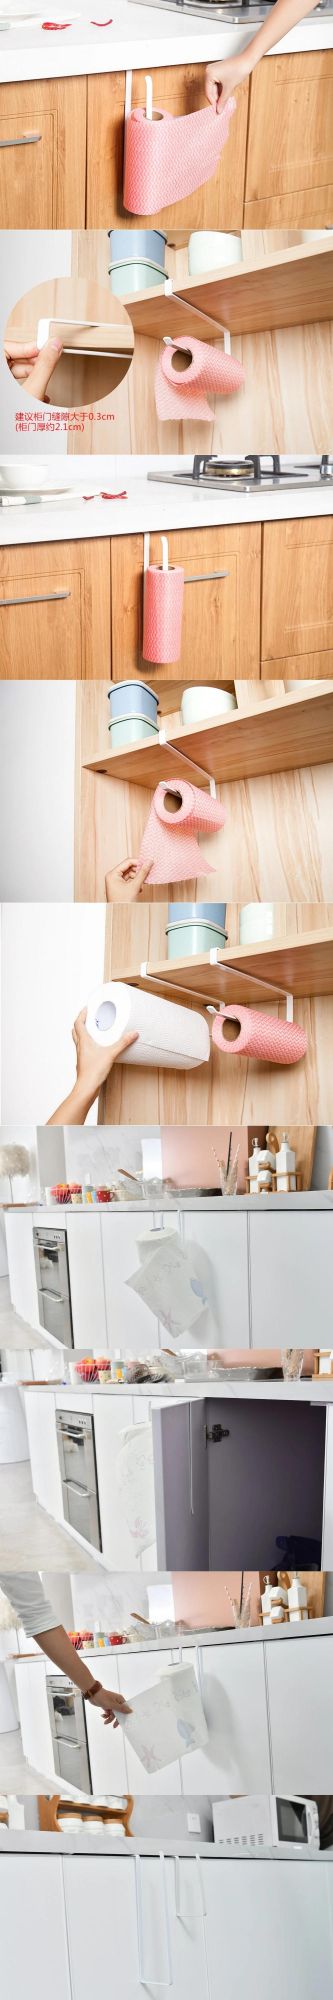 Creative Ironwork Paper Towel Holder No Punching Bathroom Kitchen Living Room Paper Holder Durable Paper Roll Holder